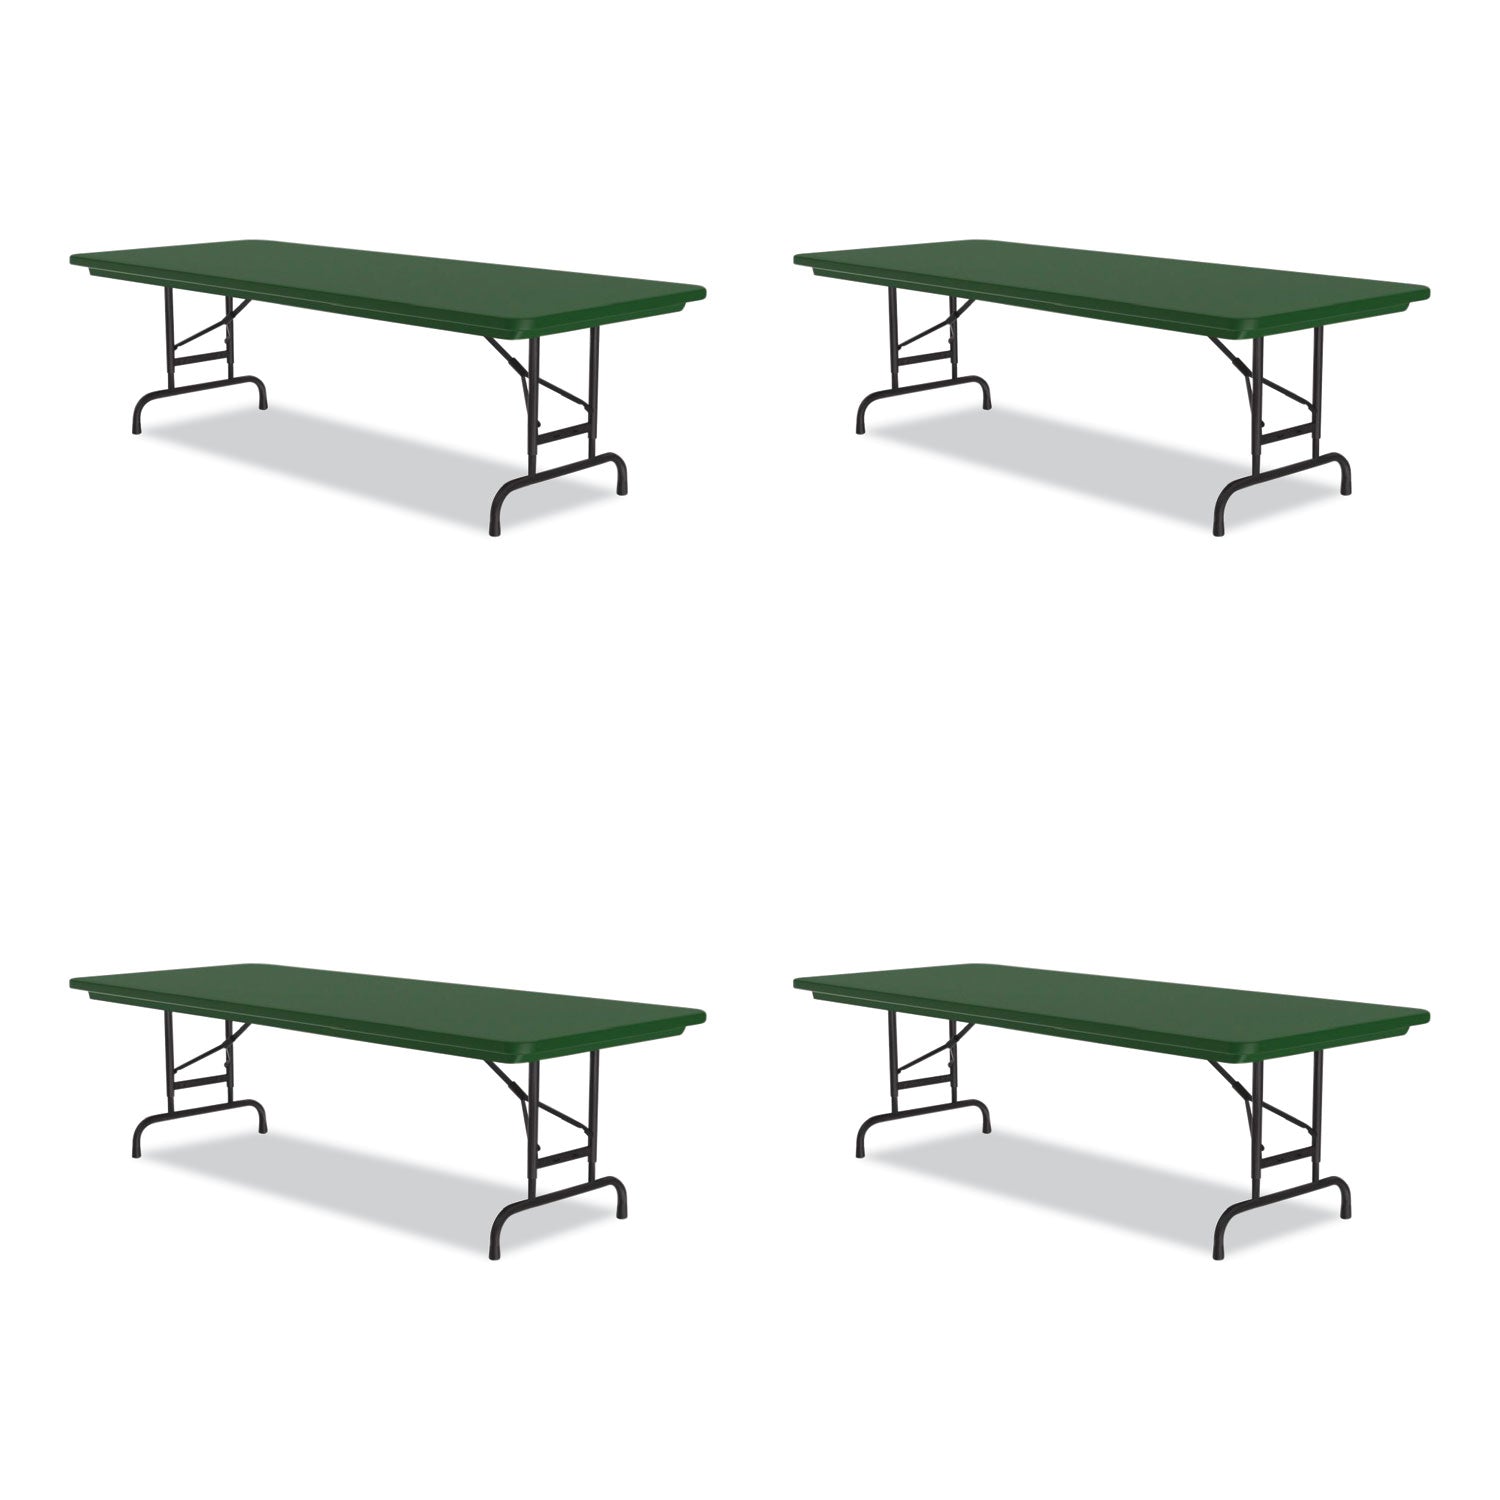 adjustable-folding-tables-rectangular-72-x-30-x-22-to-32-green-top-black-base-4-pallet-ships-in-4-6-business-days_crlra3072294p - 1